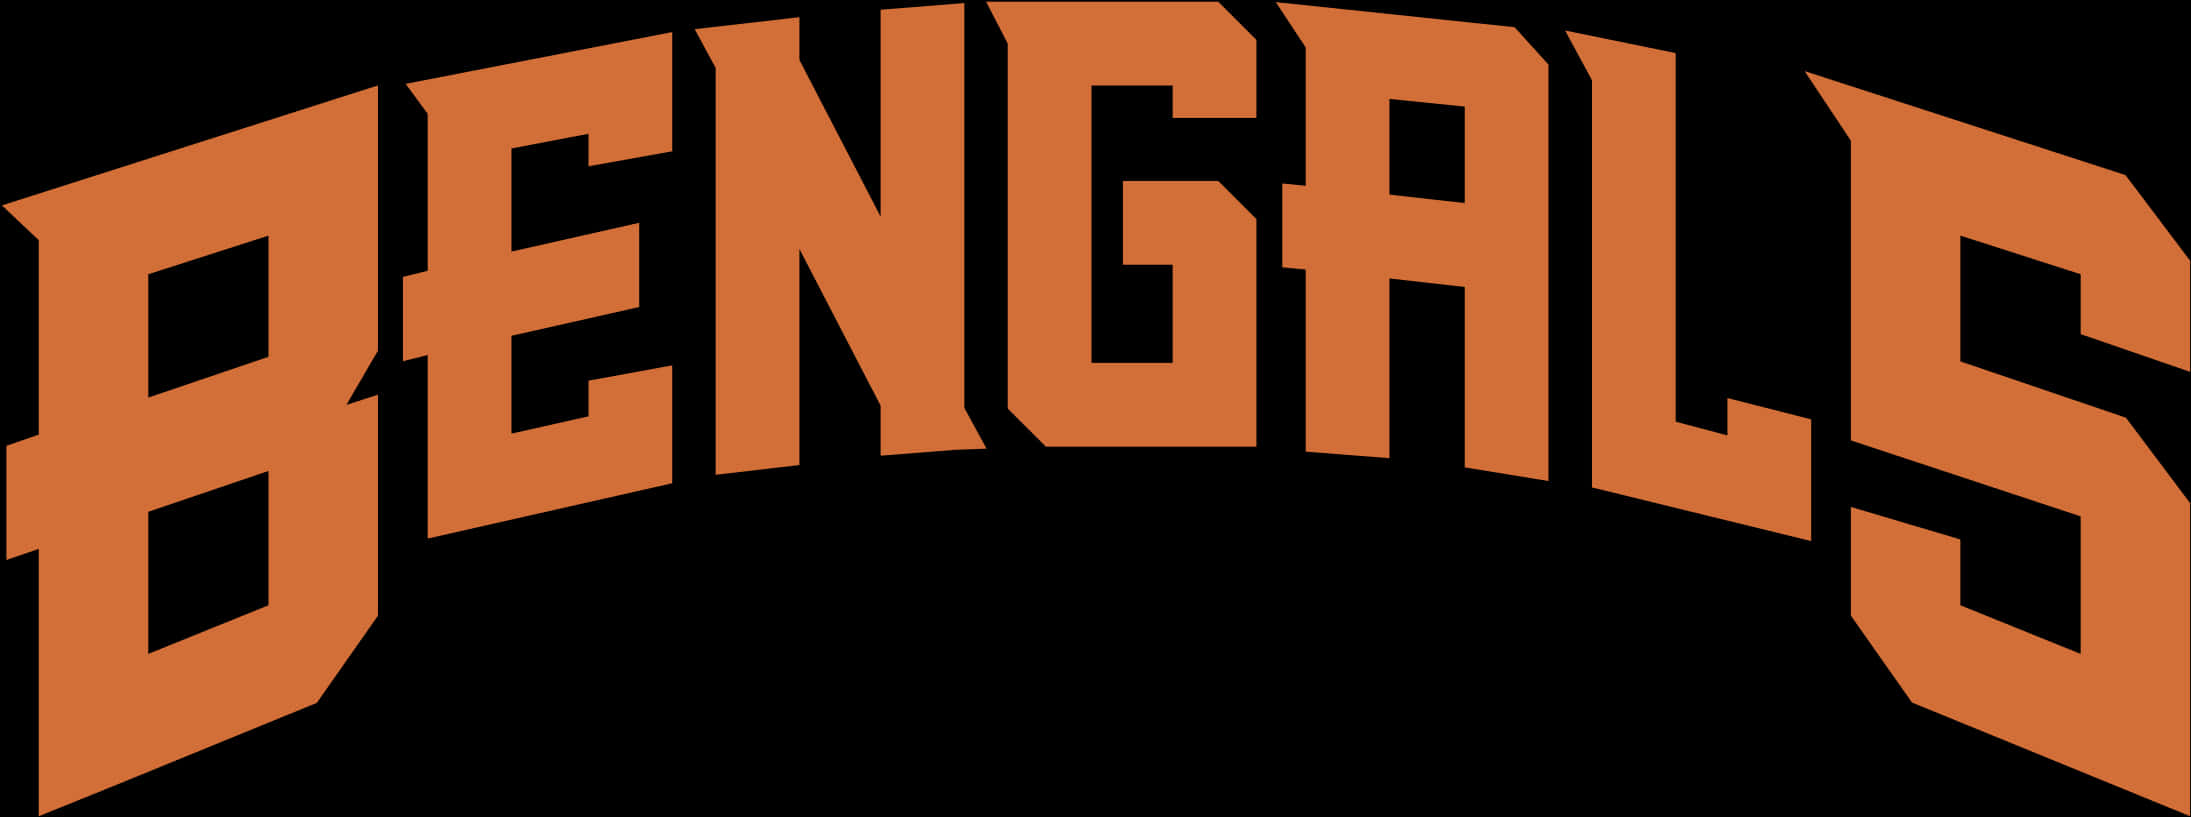 Bengals Logo In Sporty Orange Lettering